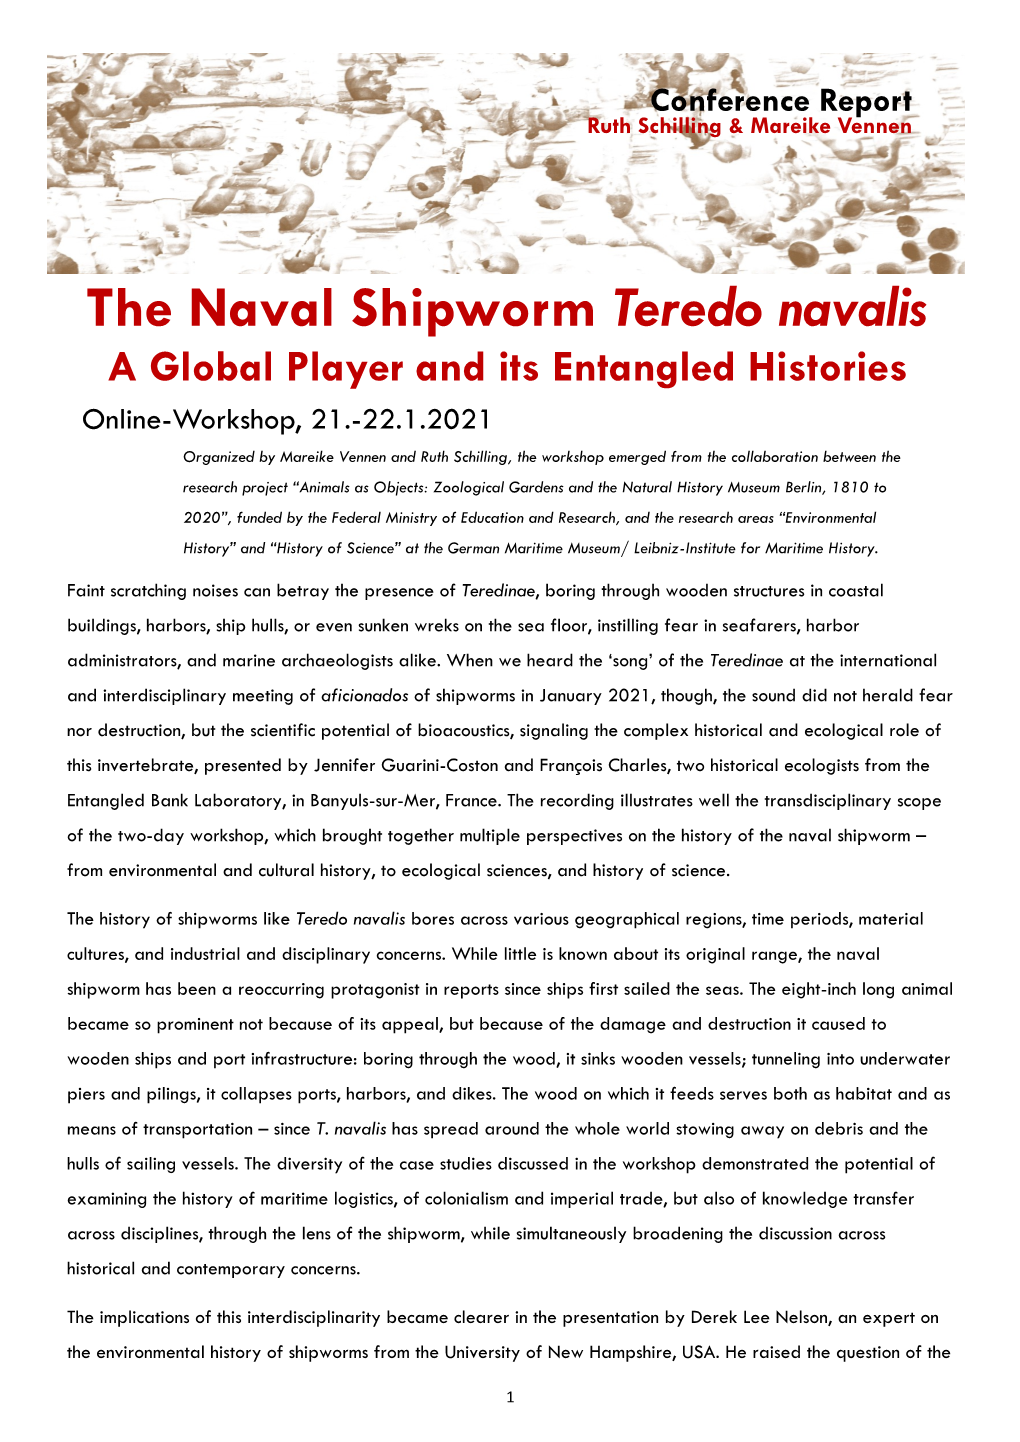 The Naval Shipworm Teredo Navalis